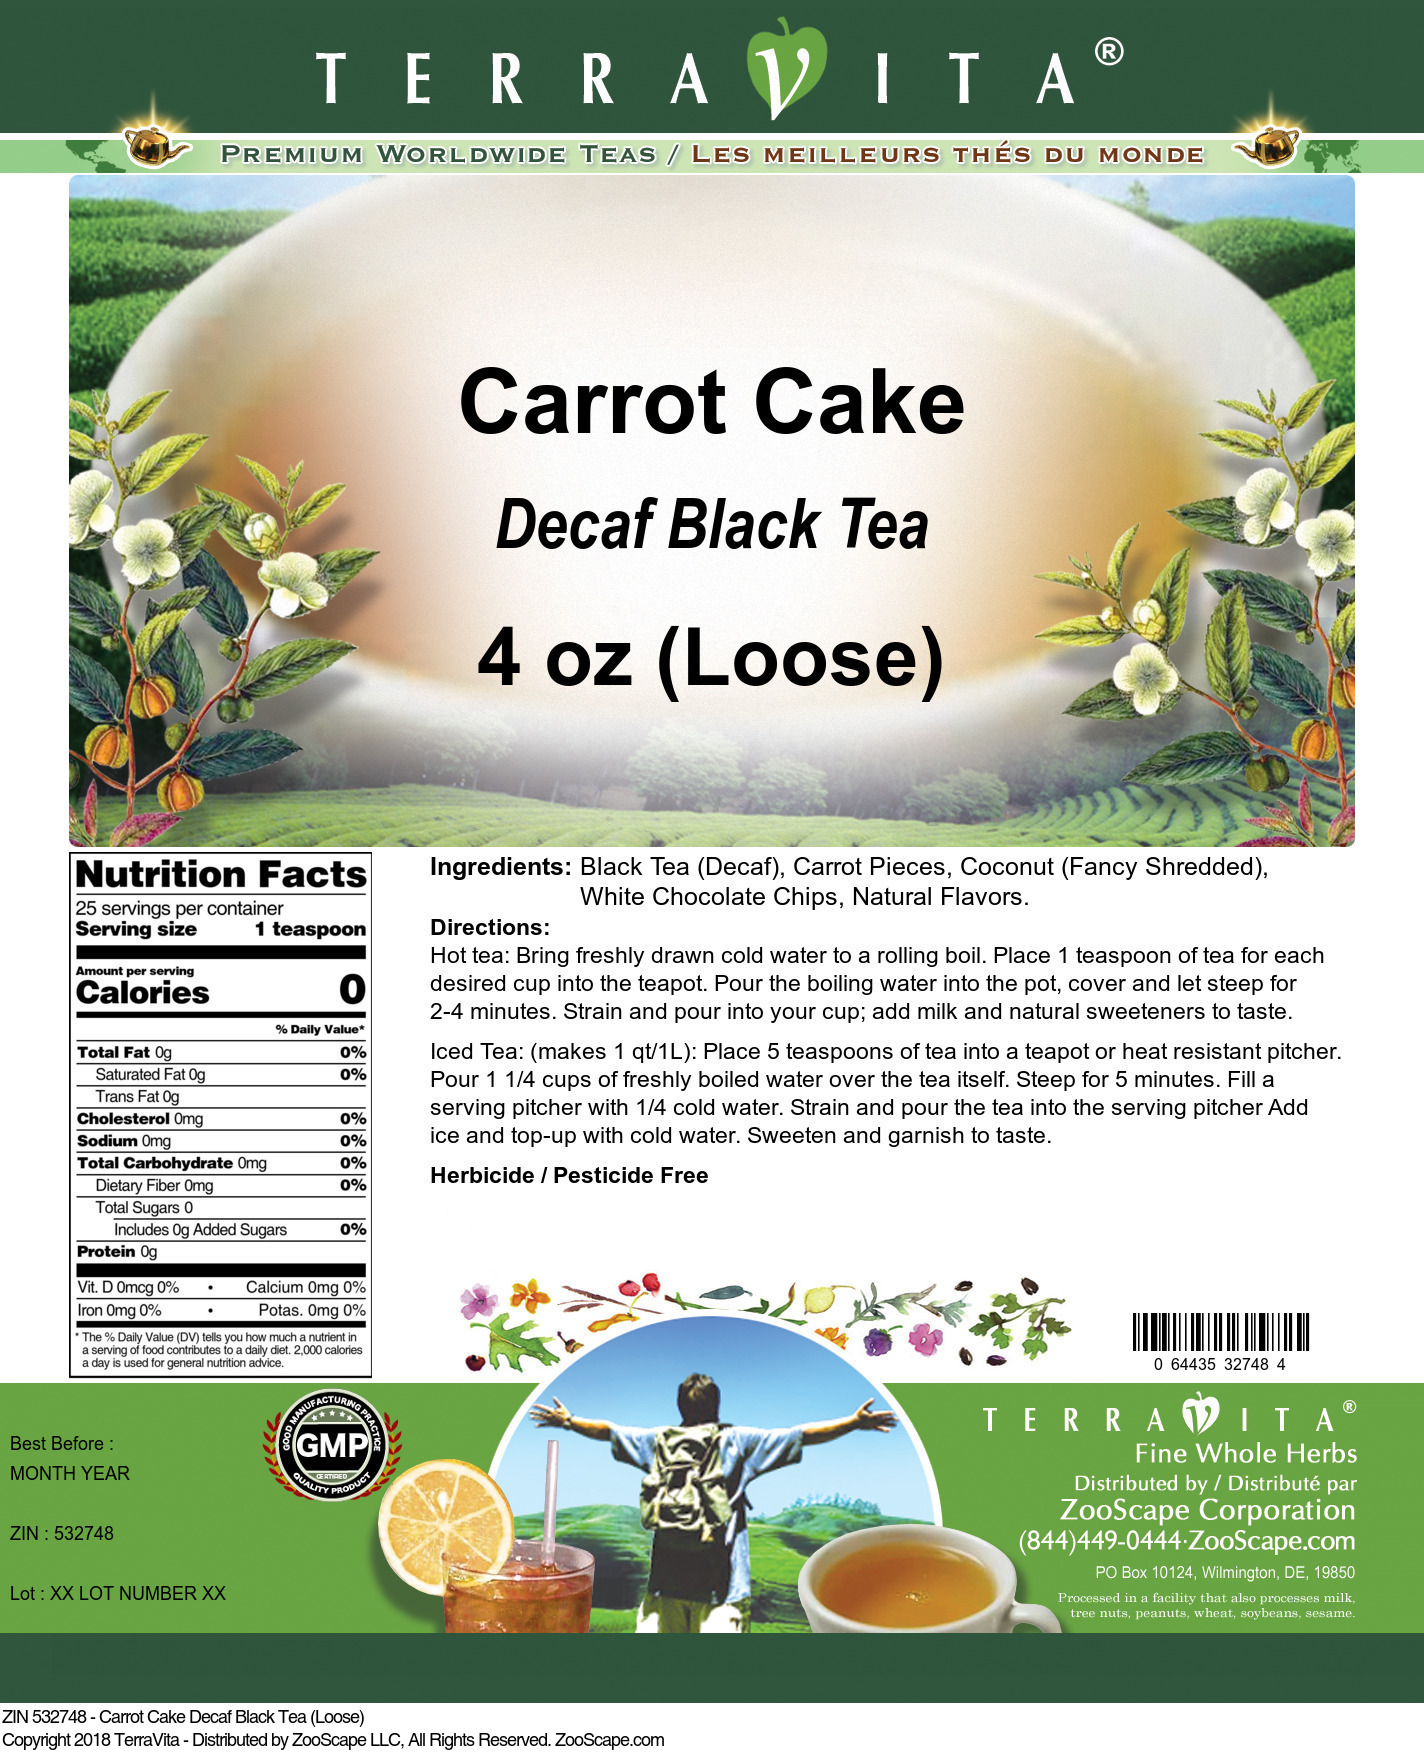 Carrot Cake Decaf Black Tea (Loose) - Label